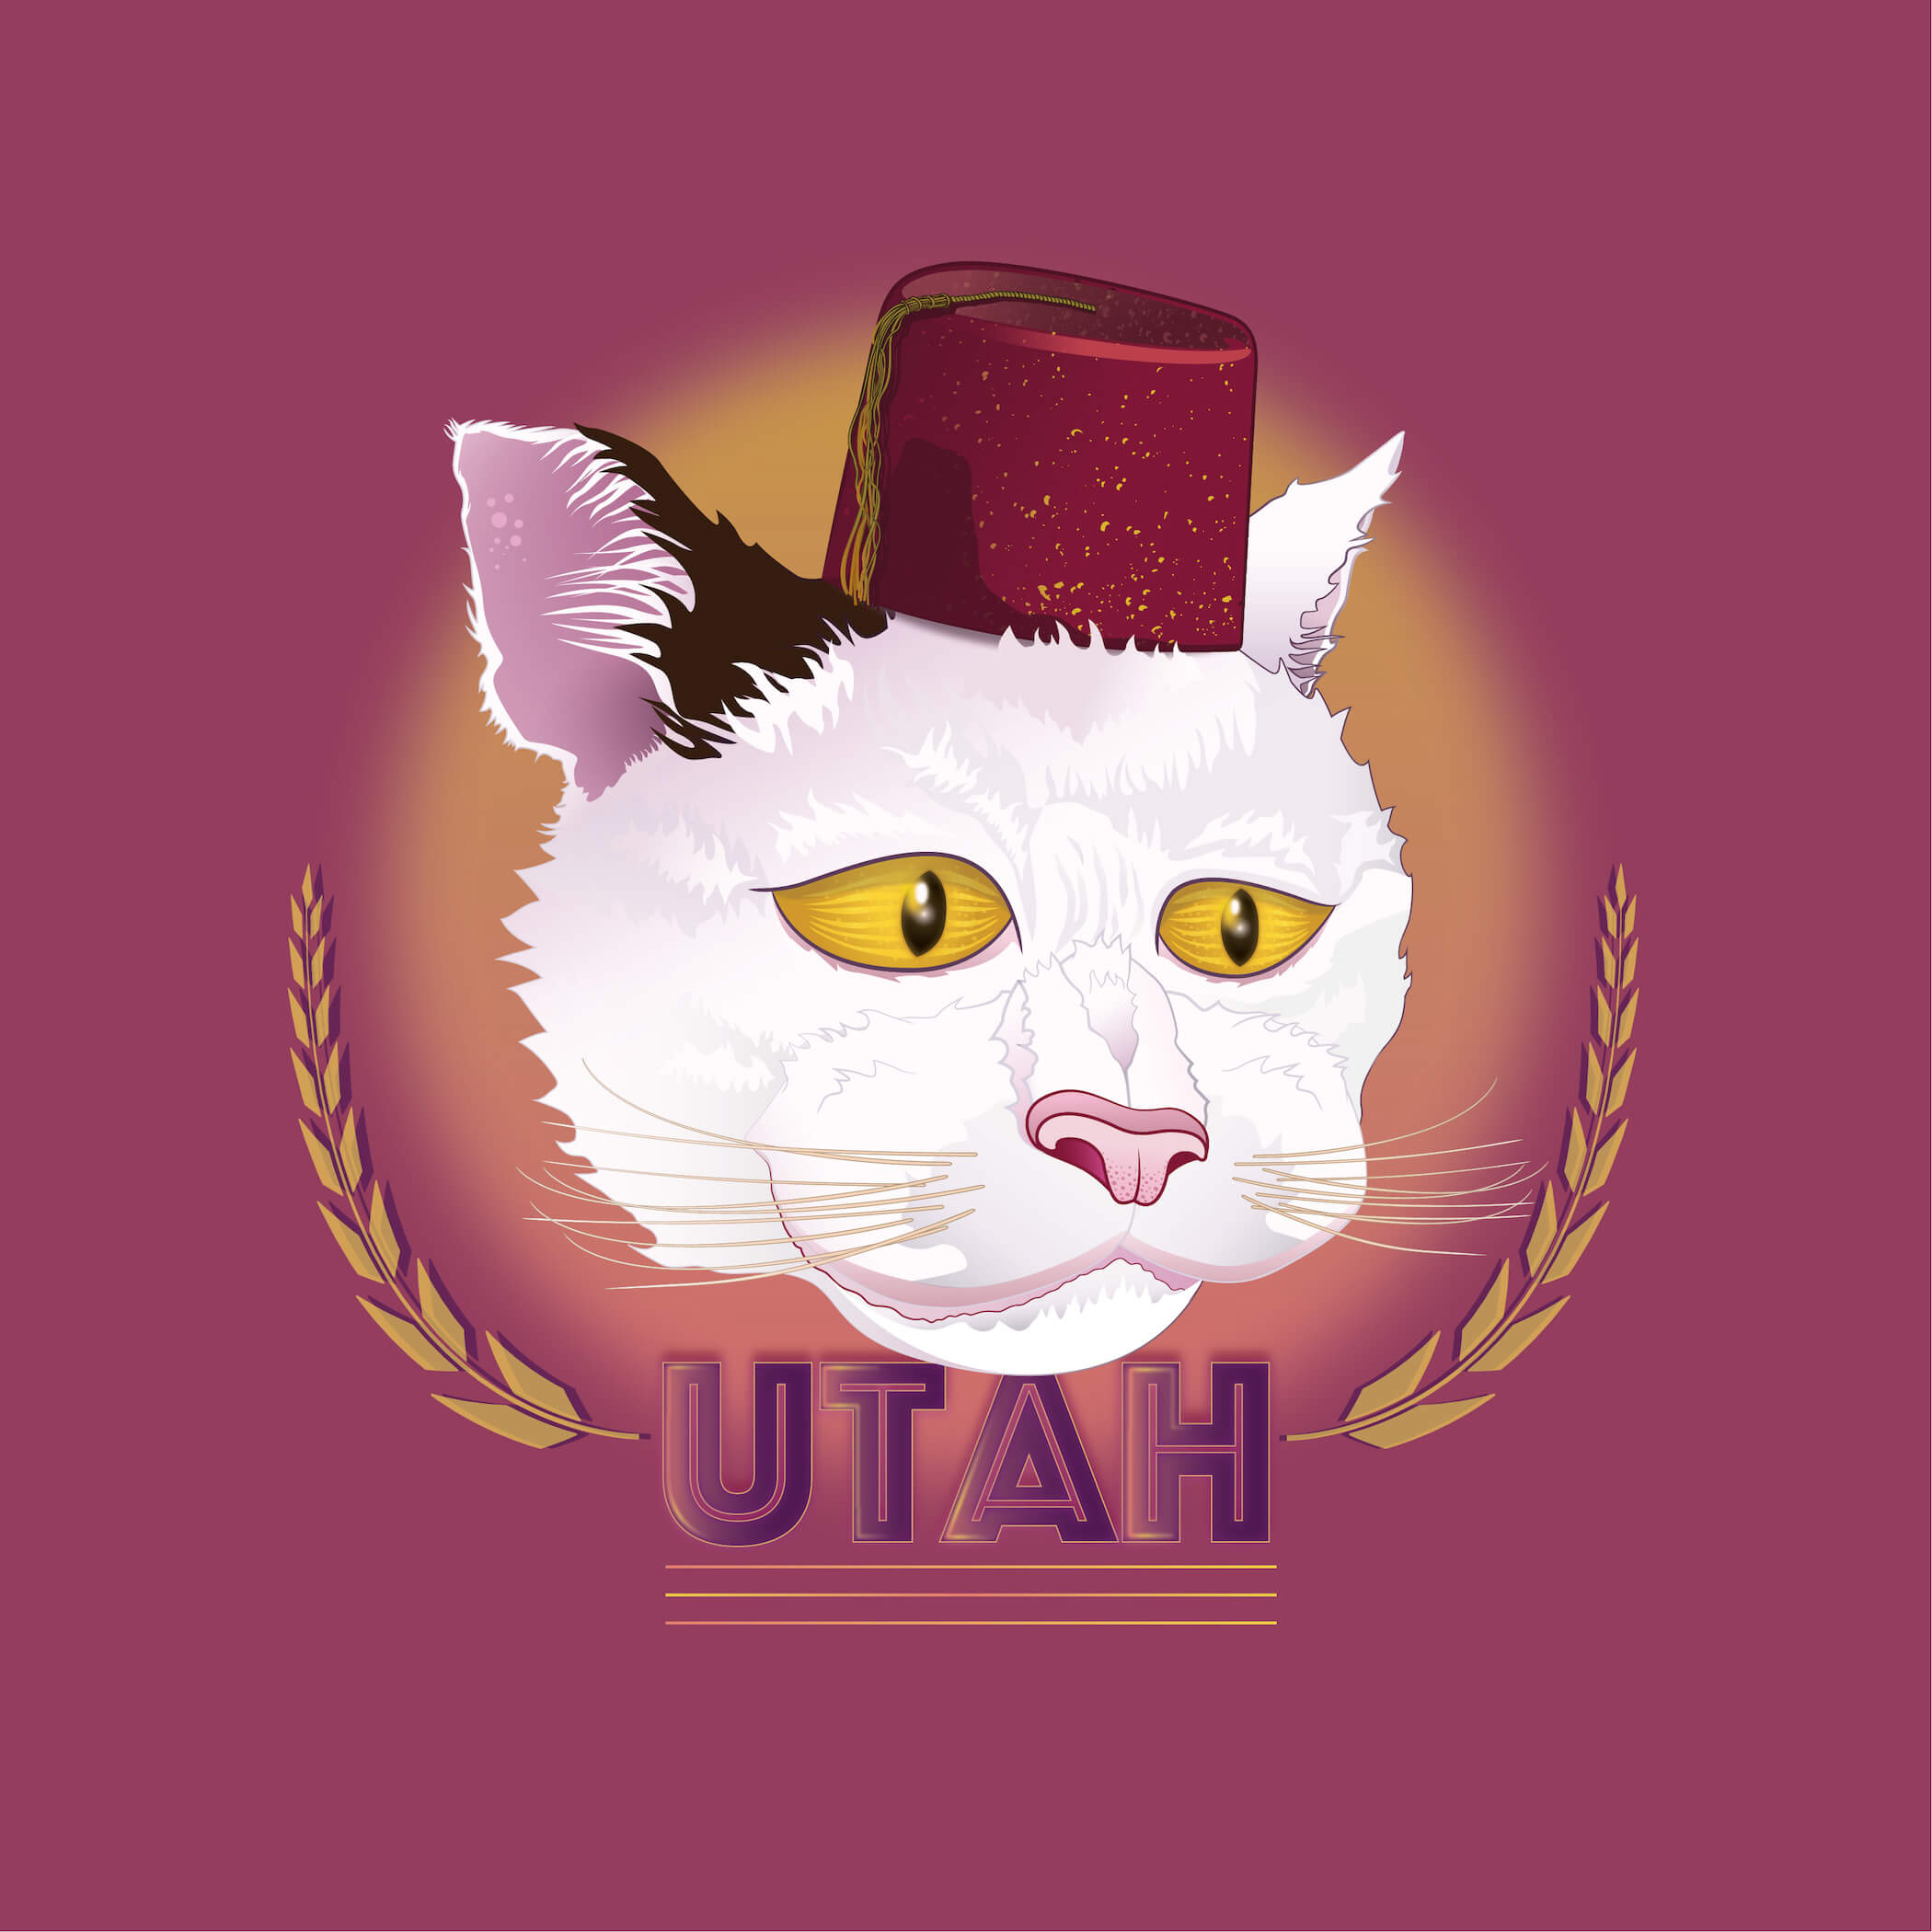 cat named Utah wearing a fez